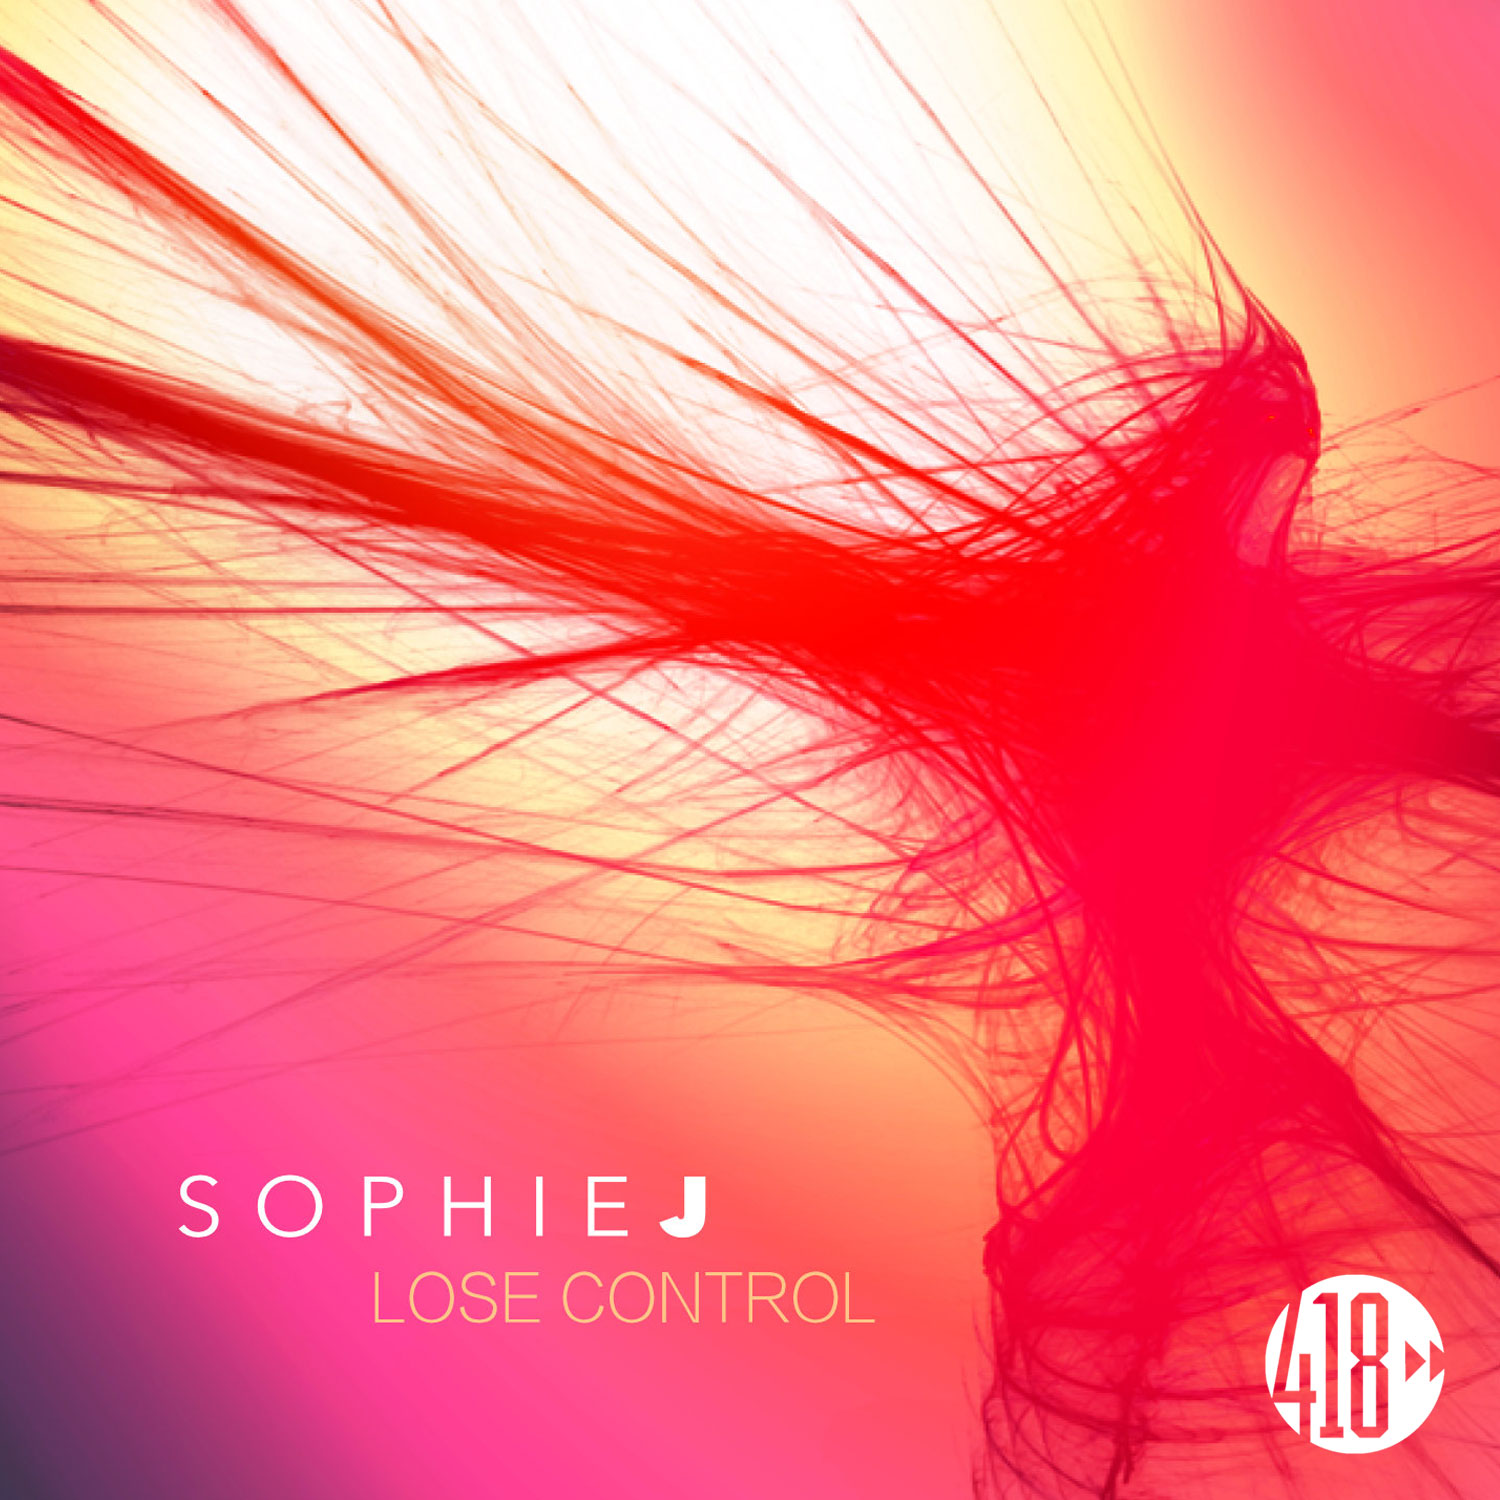 Sophie J - Lose Control (Andy Galea Remix)